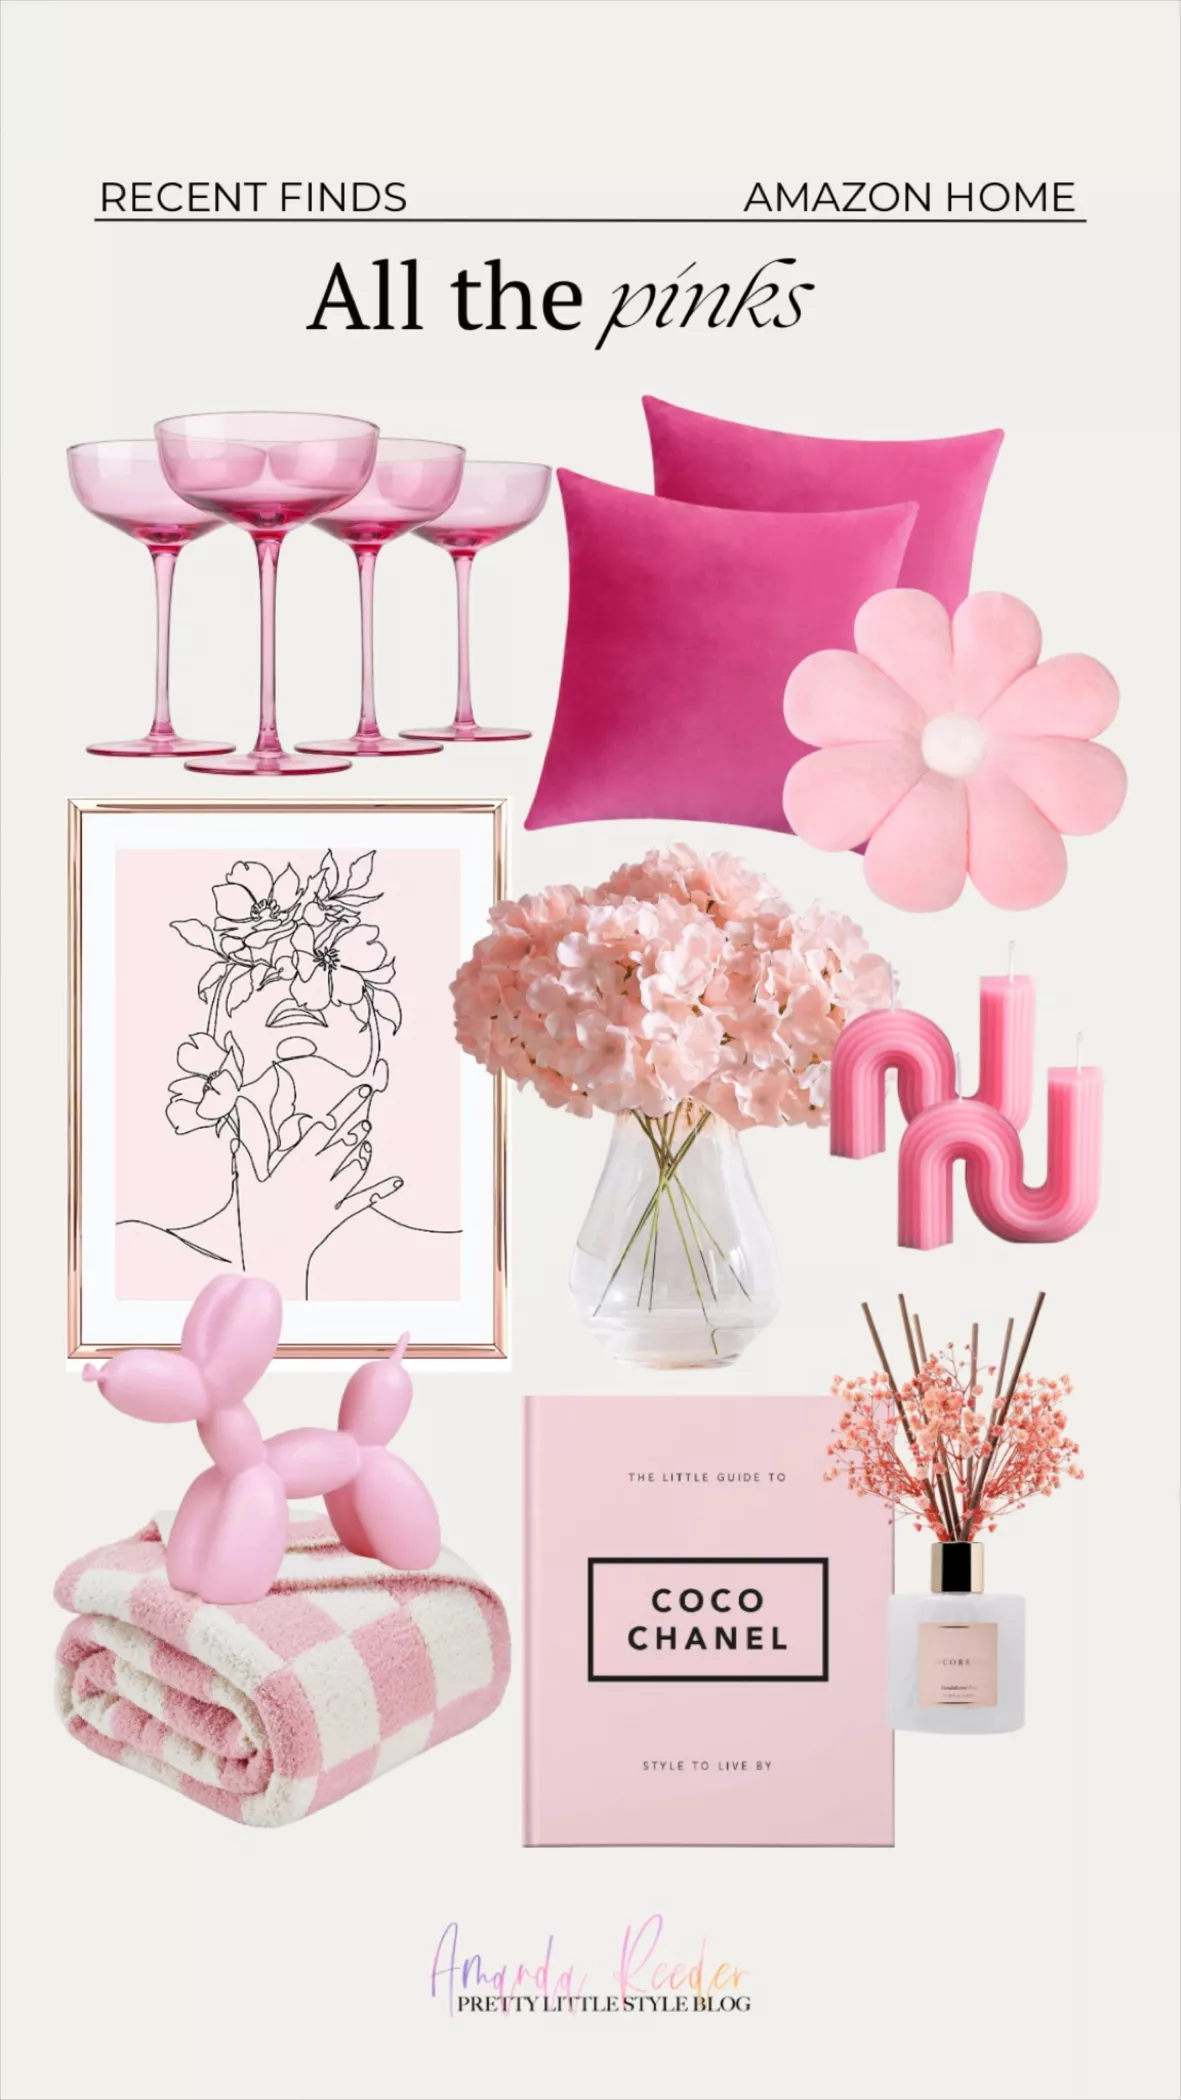 Blush Fashion Books On Pink Flower Wall